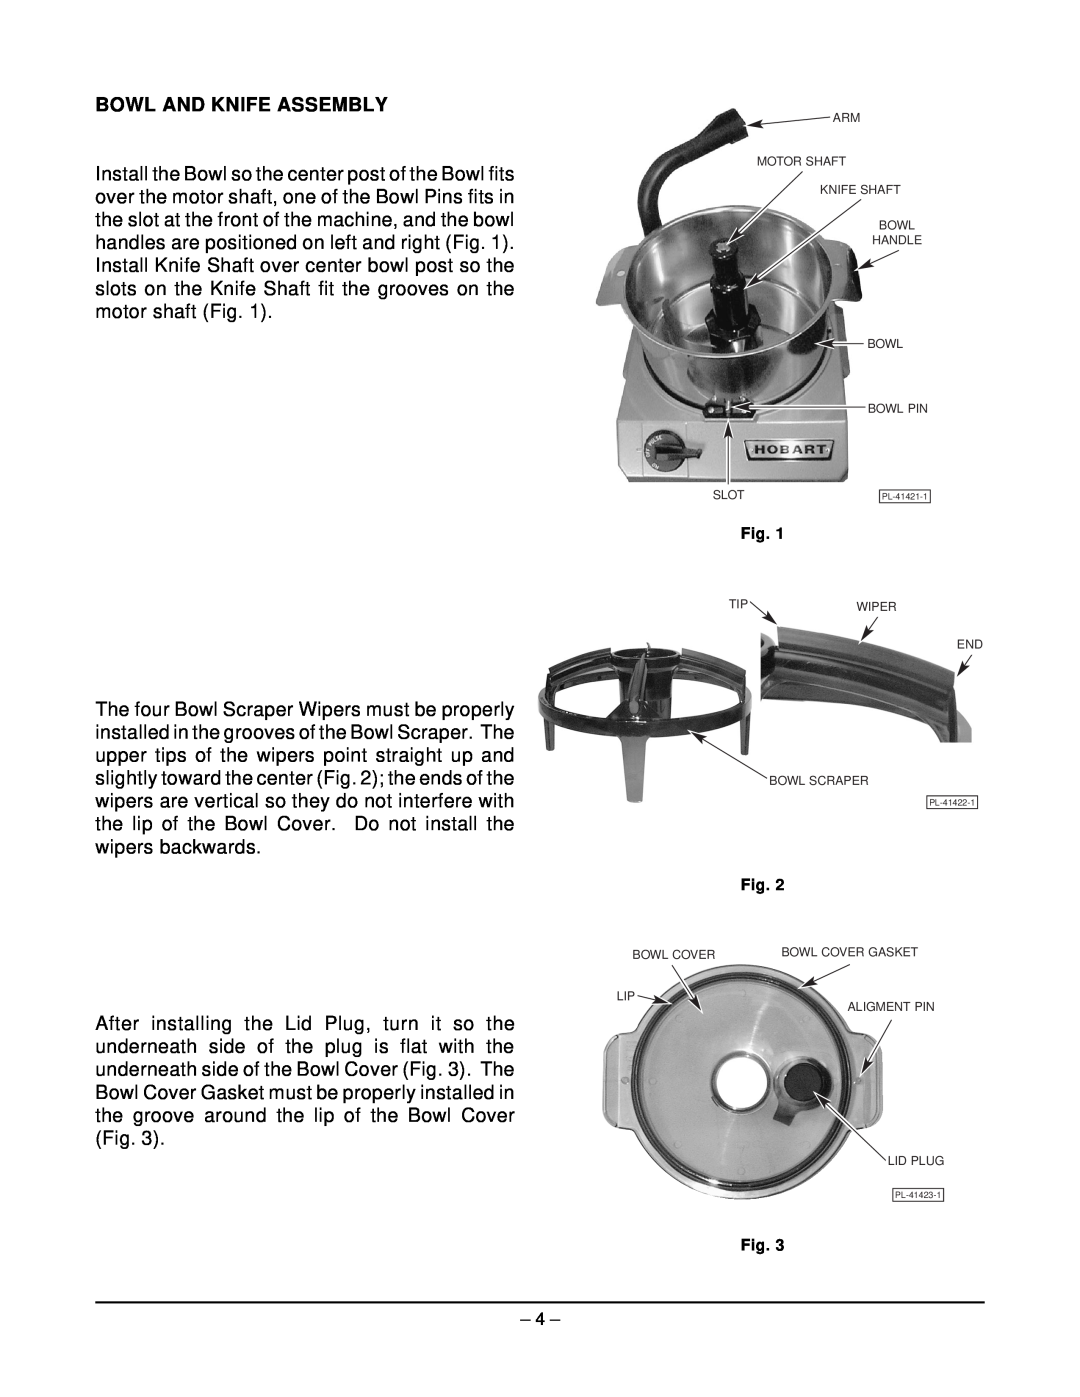 Hobart HCM62 manual Bowl And Knife Assembly, Arm Motor Shaft Knife Shaft Bowl Handle Bowl Bowl Pin, Slot, Bowl Cover Gasket 